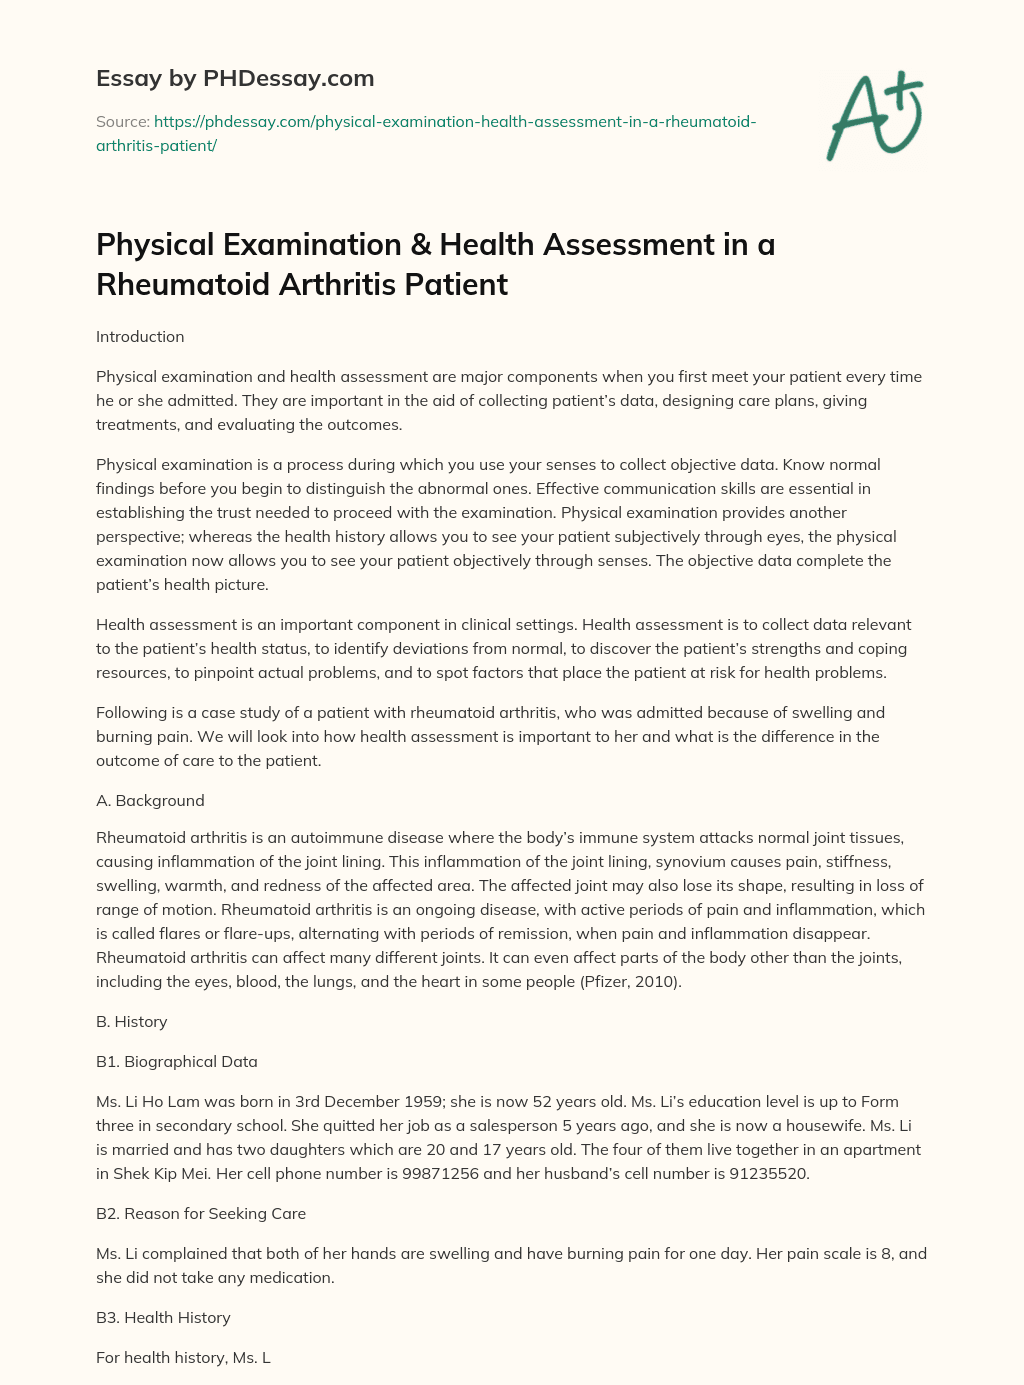 Physical Examination & Health Assessment in a Rheumatoid Arthritis Patient essay